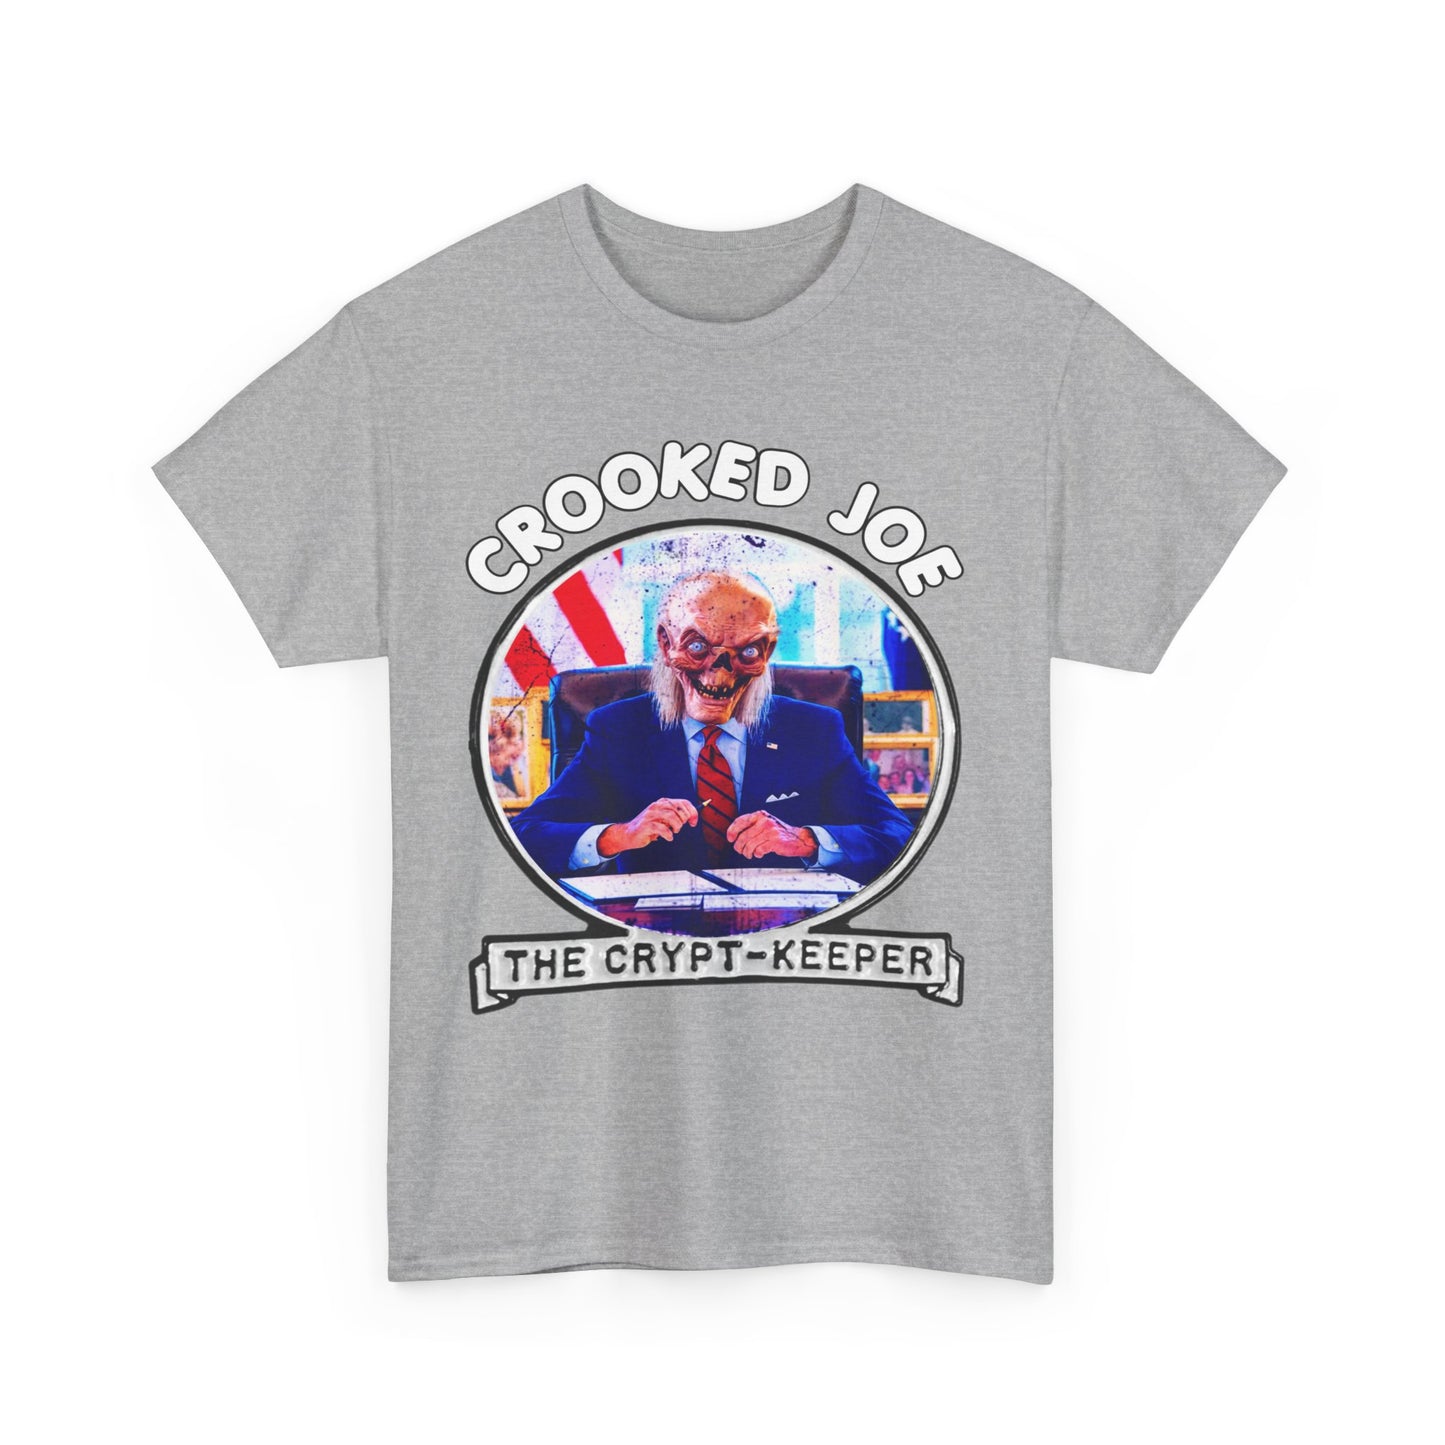 Crooked Joe Shirt